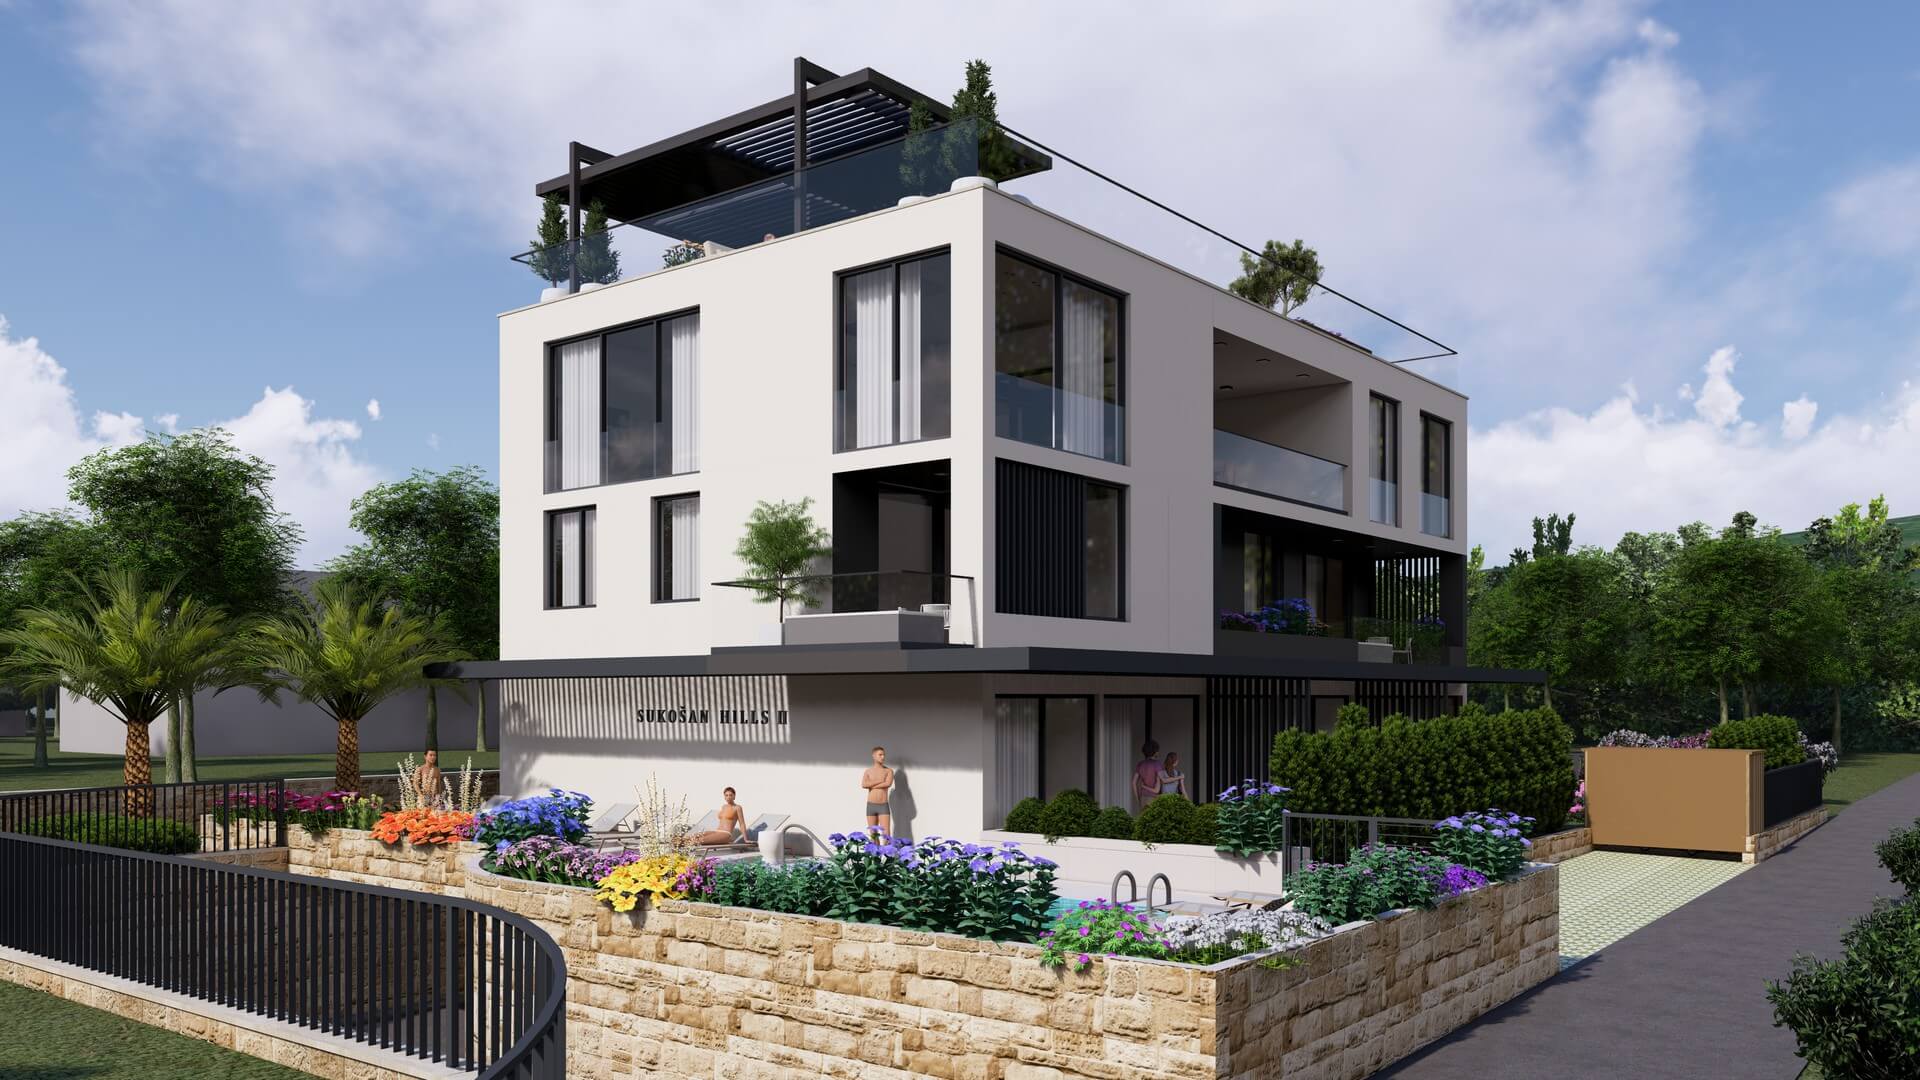 Sukosan Hills apartmani - Croatia - Jadransko more prodaja stanova - Adriatic sea